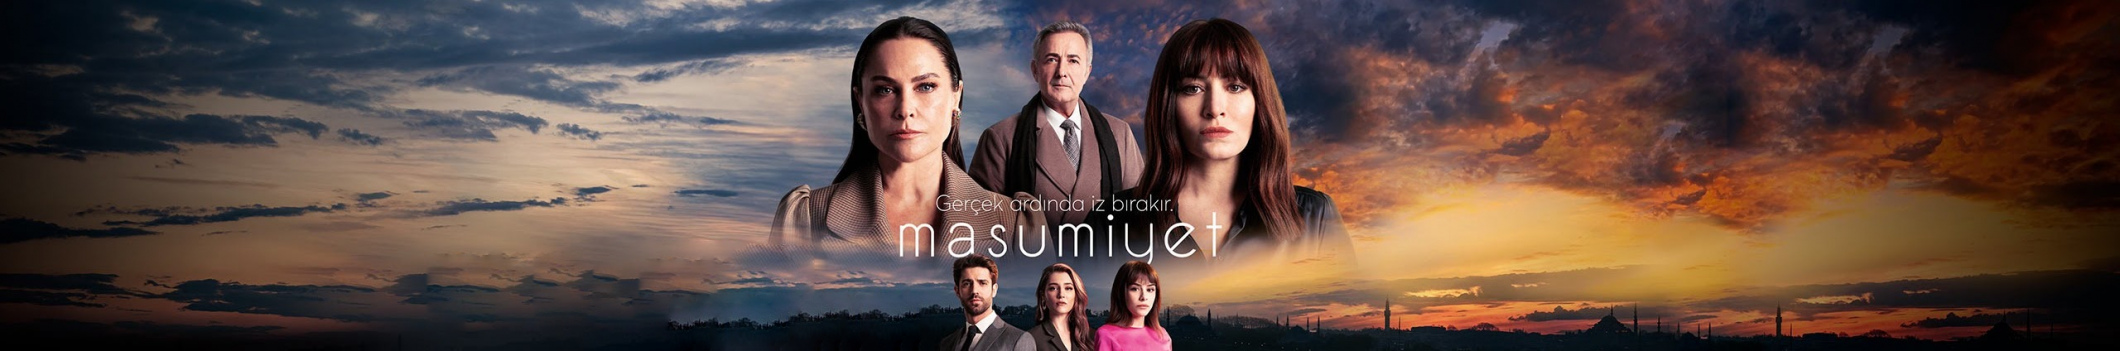 Masumiyet Season 1 English subtitles - Innocence